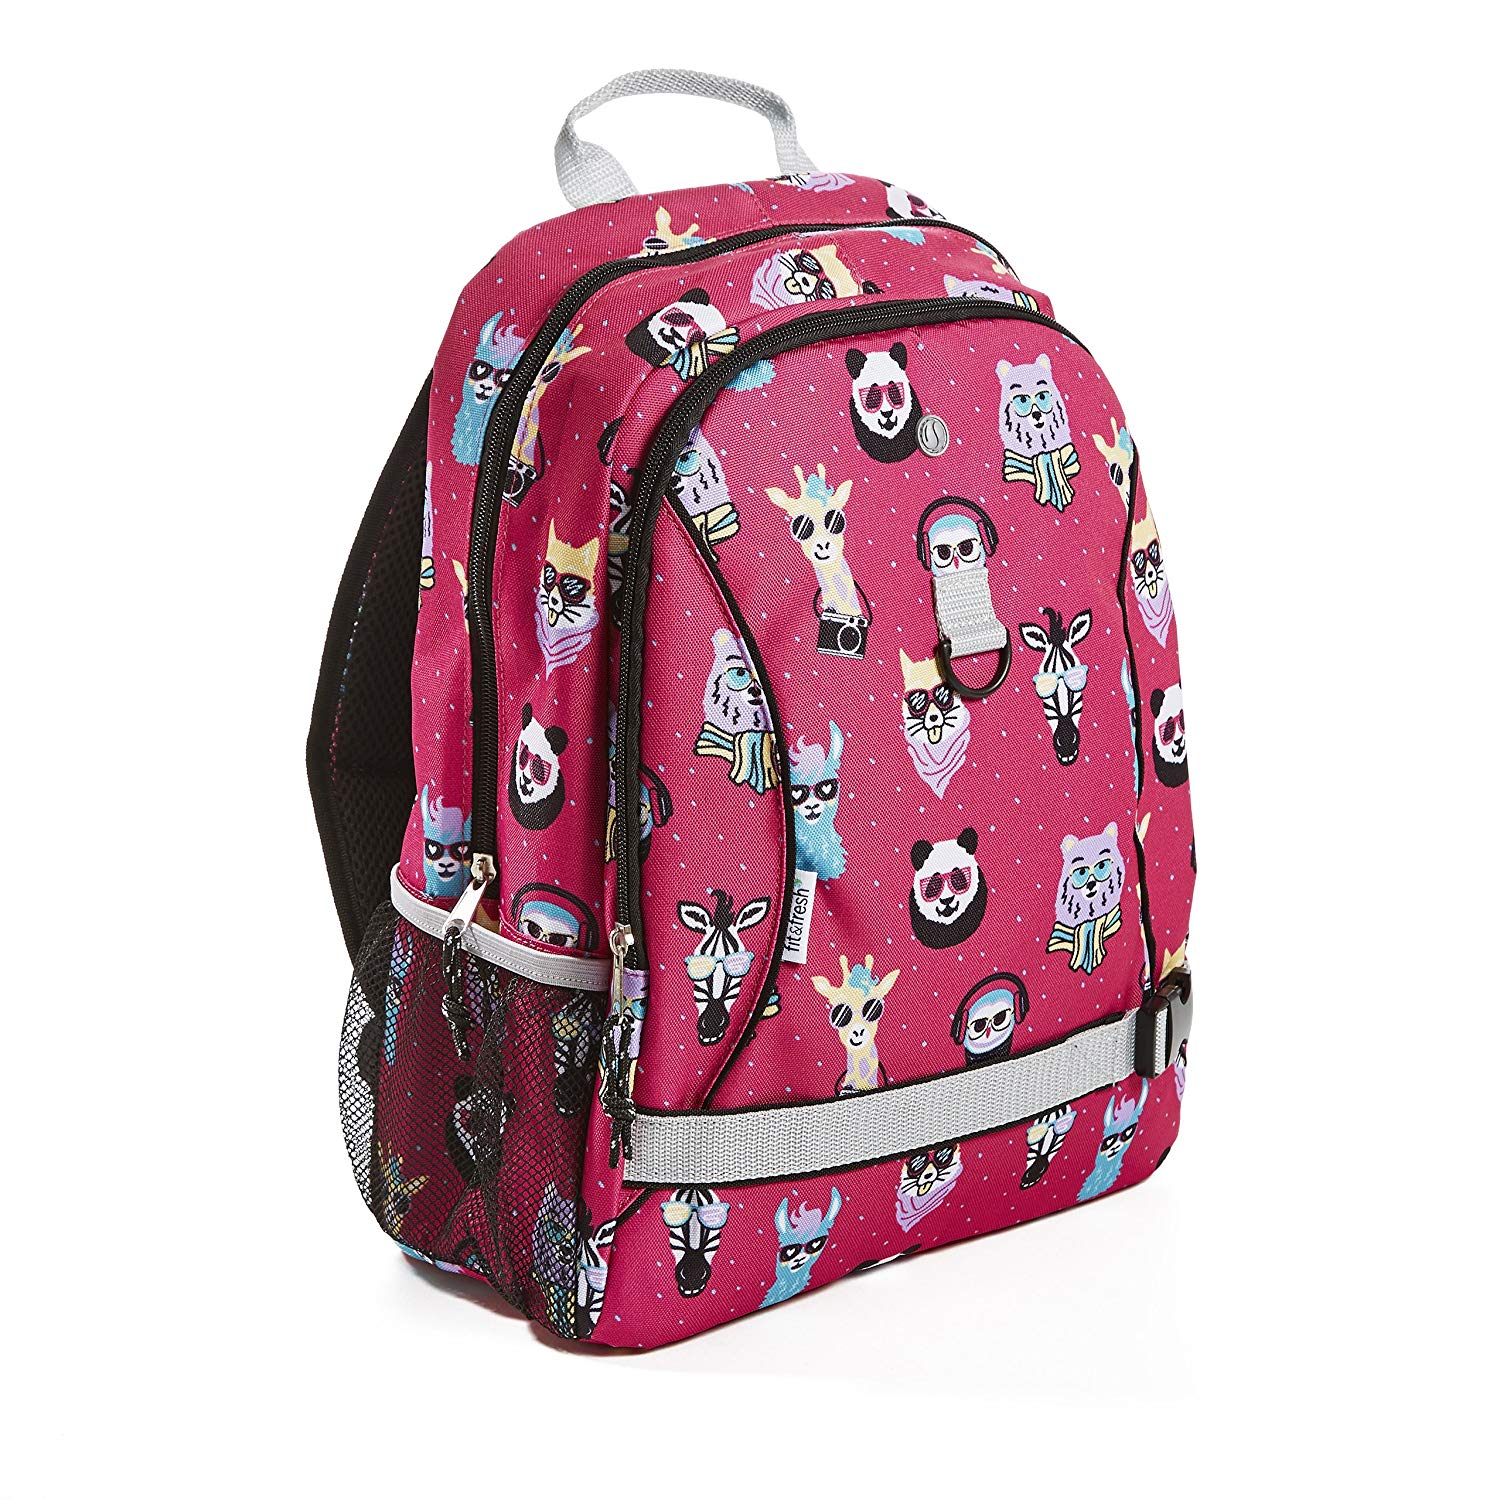 Cameron Backpack Pink Hipster